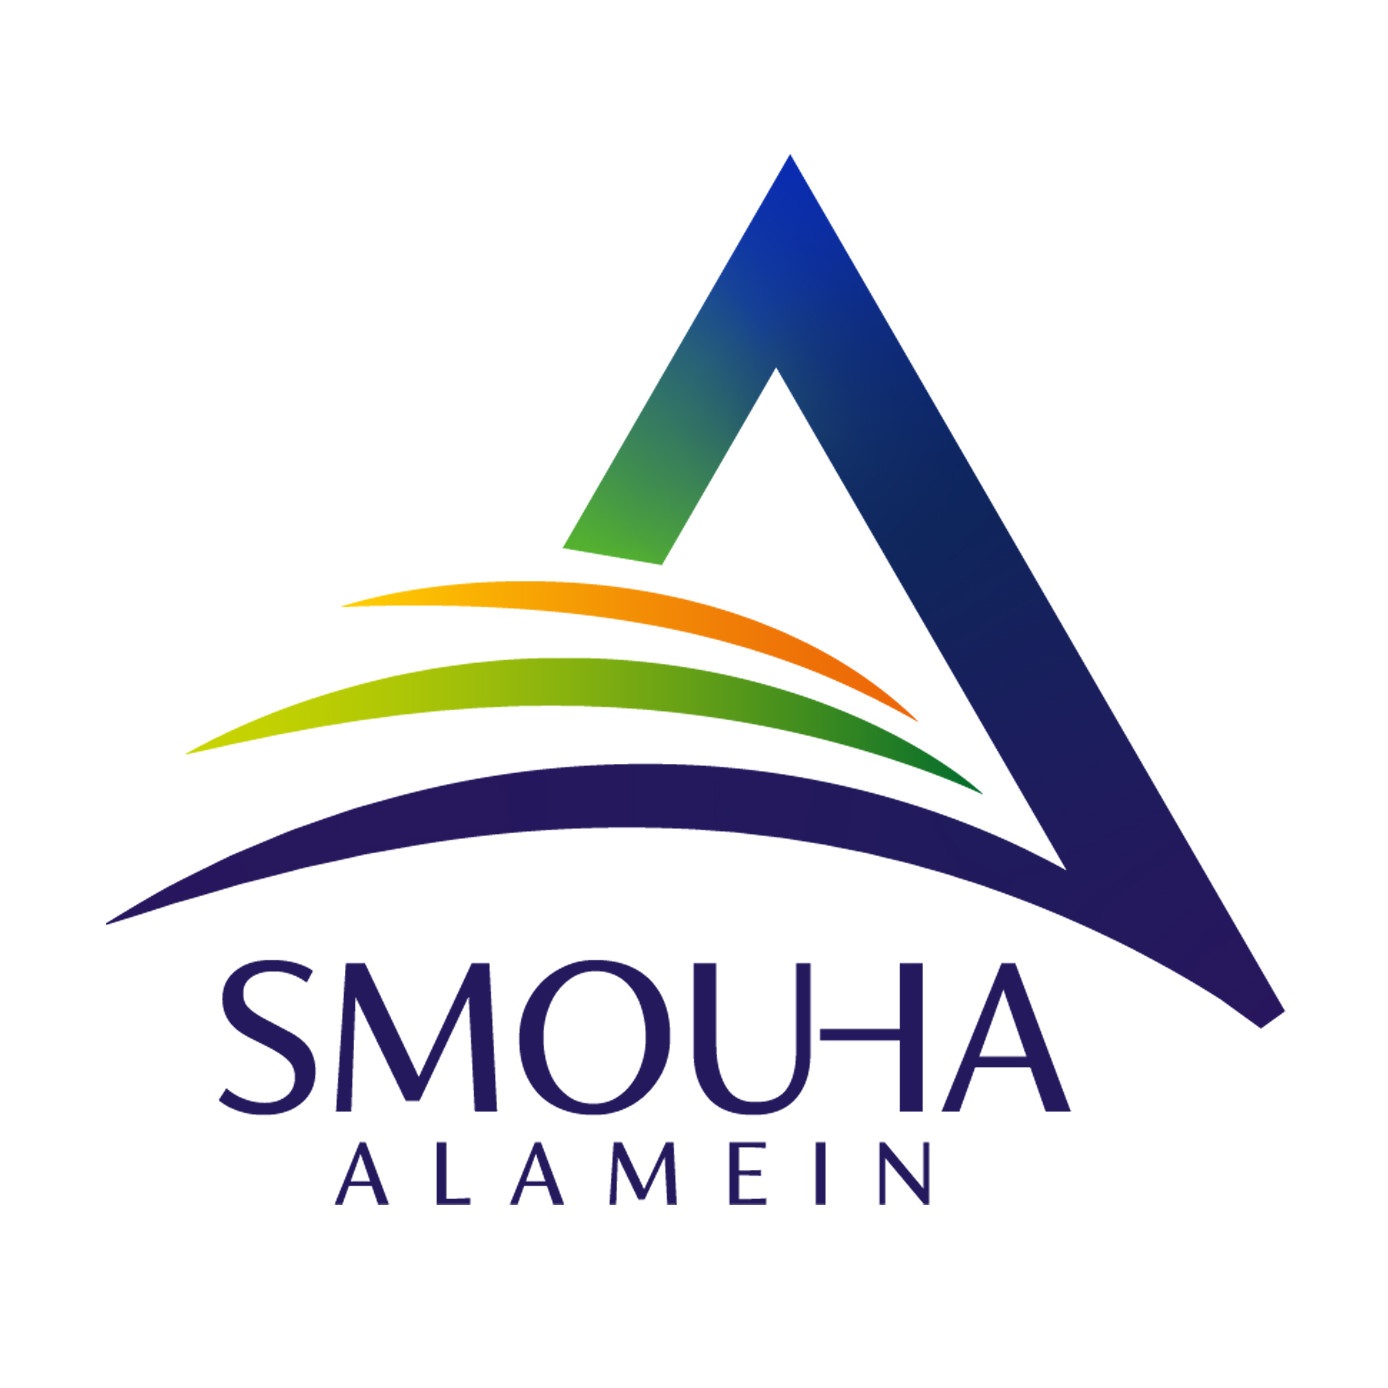 Smouha Alamein Company